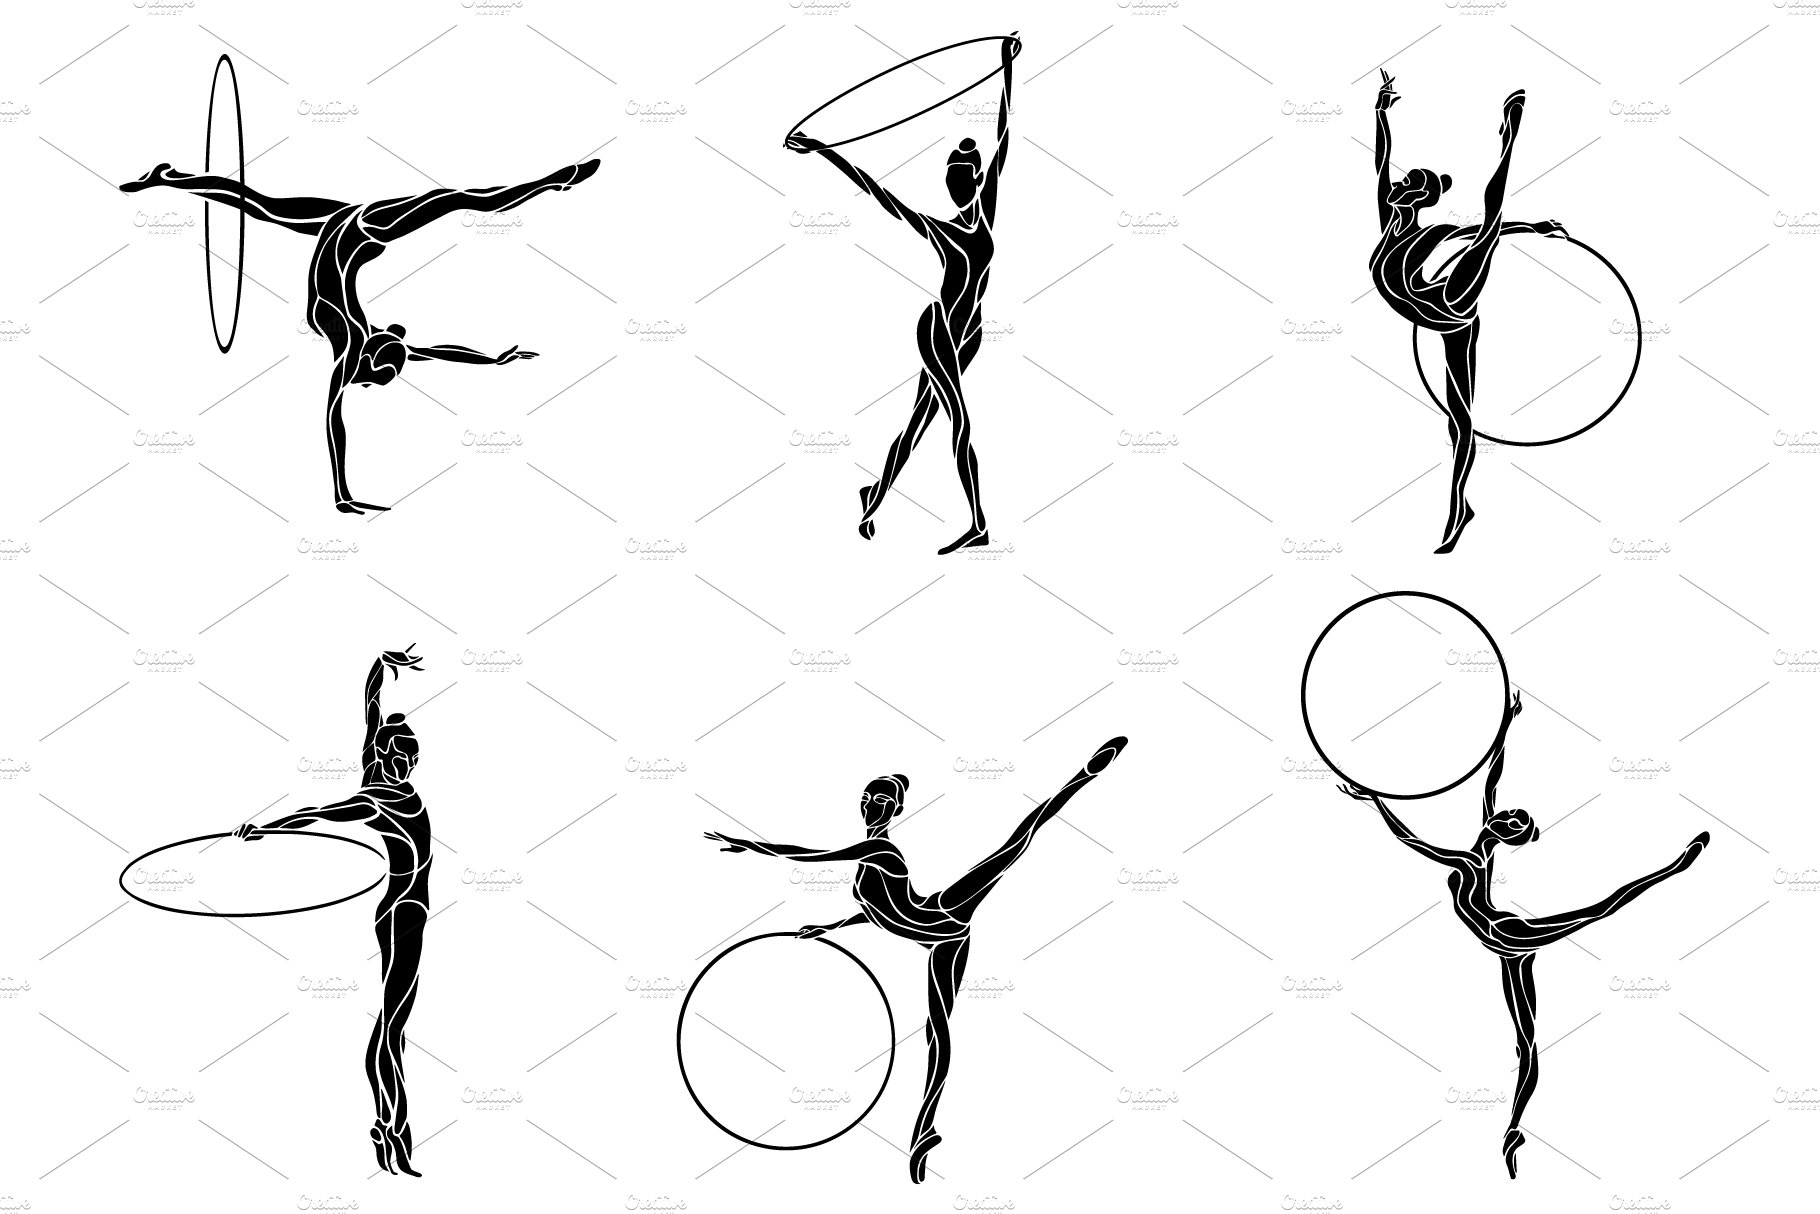 Rhythmic Gymnastics with Hoop set preview image.